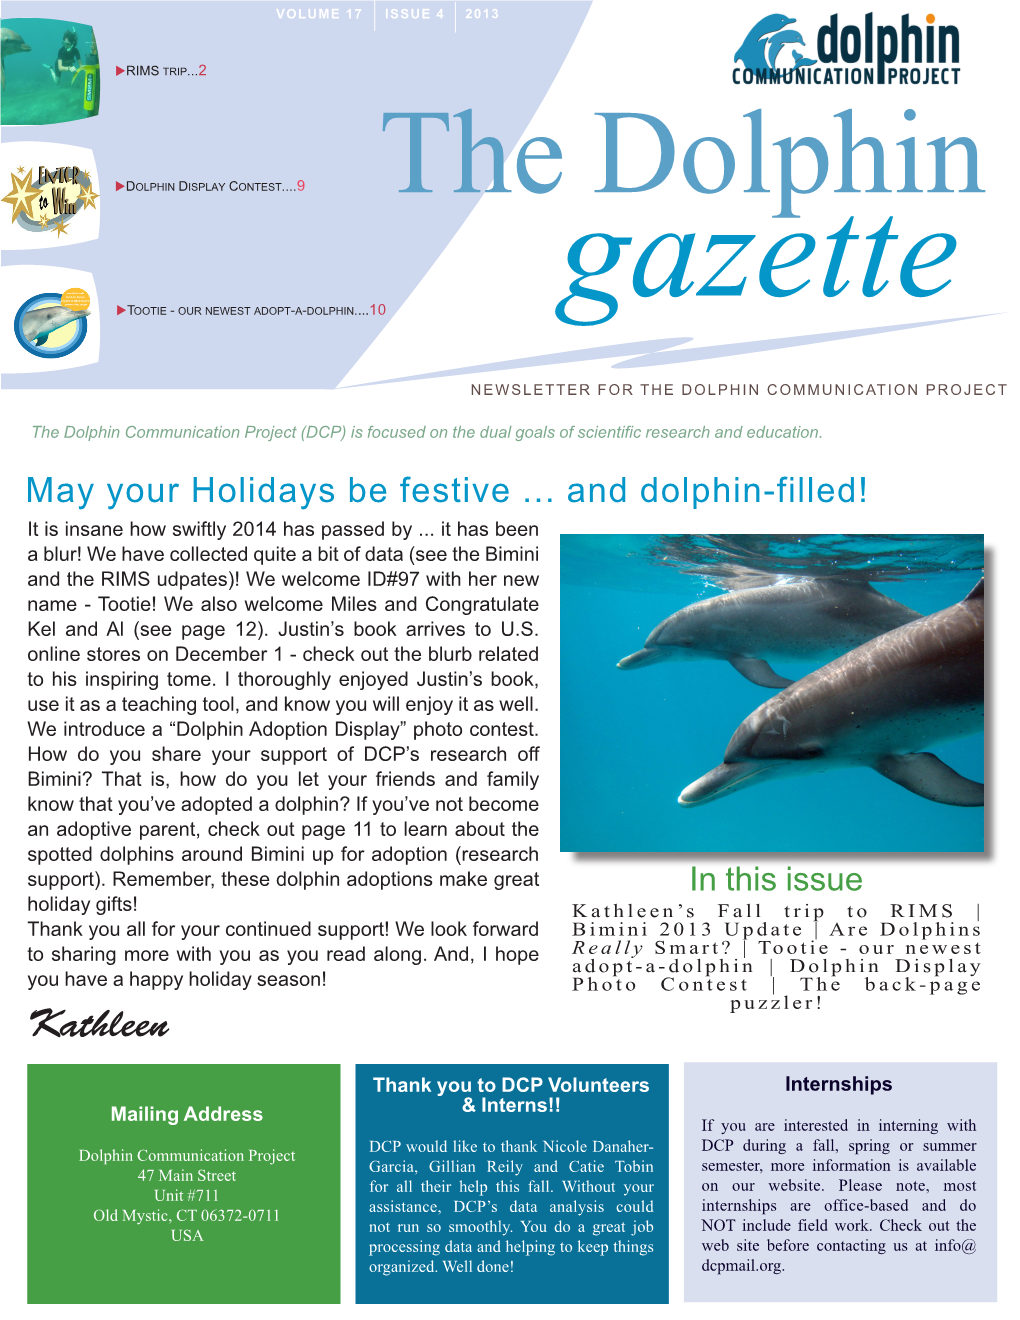 Dolphin Gazette, DCP’S Quarterly Newsletter